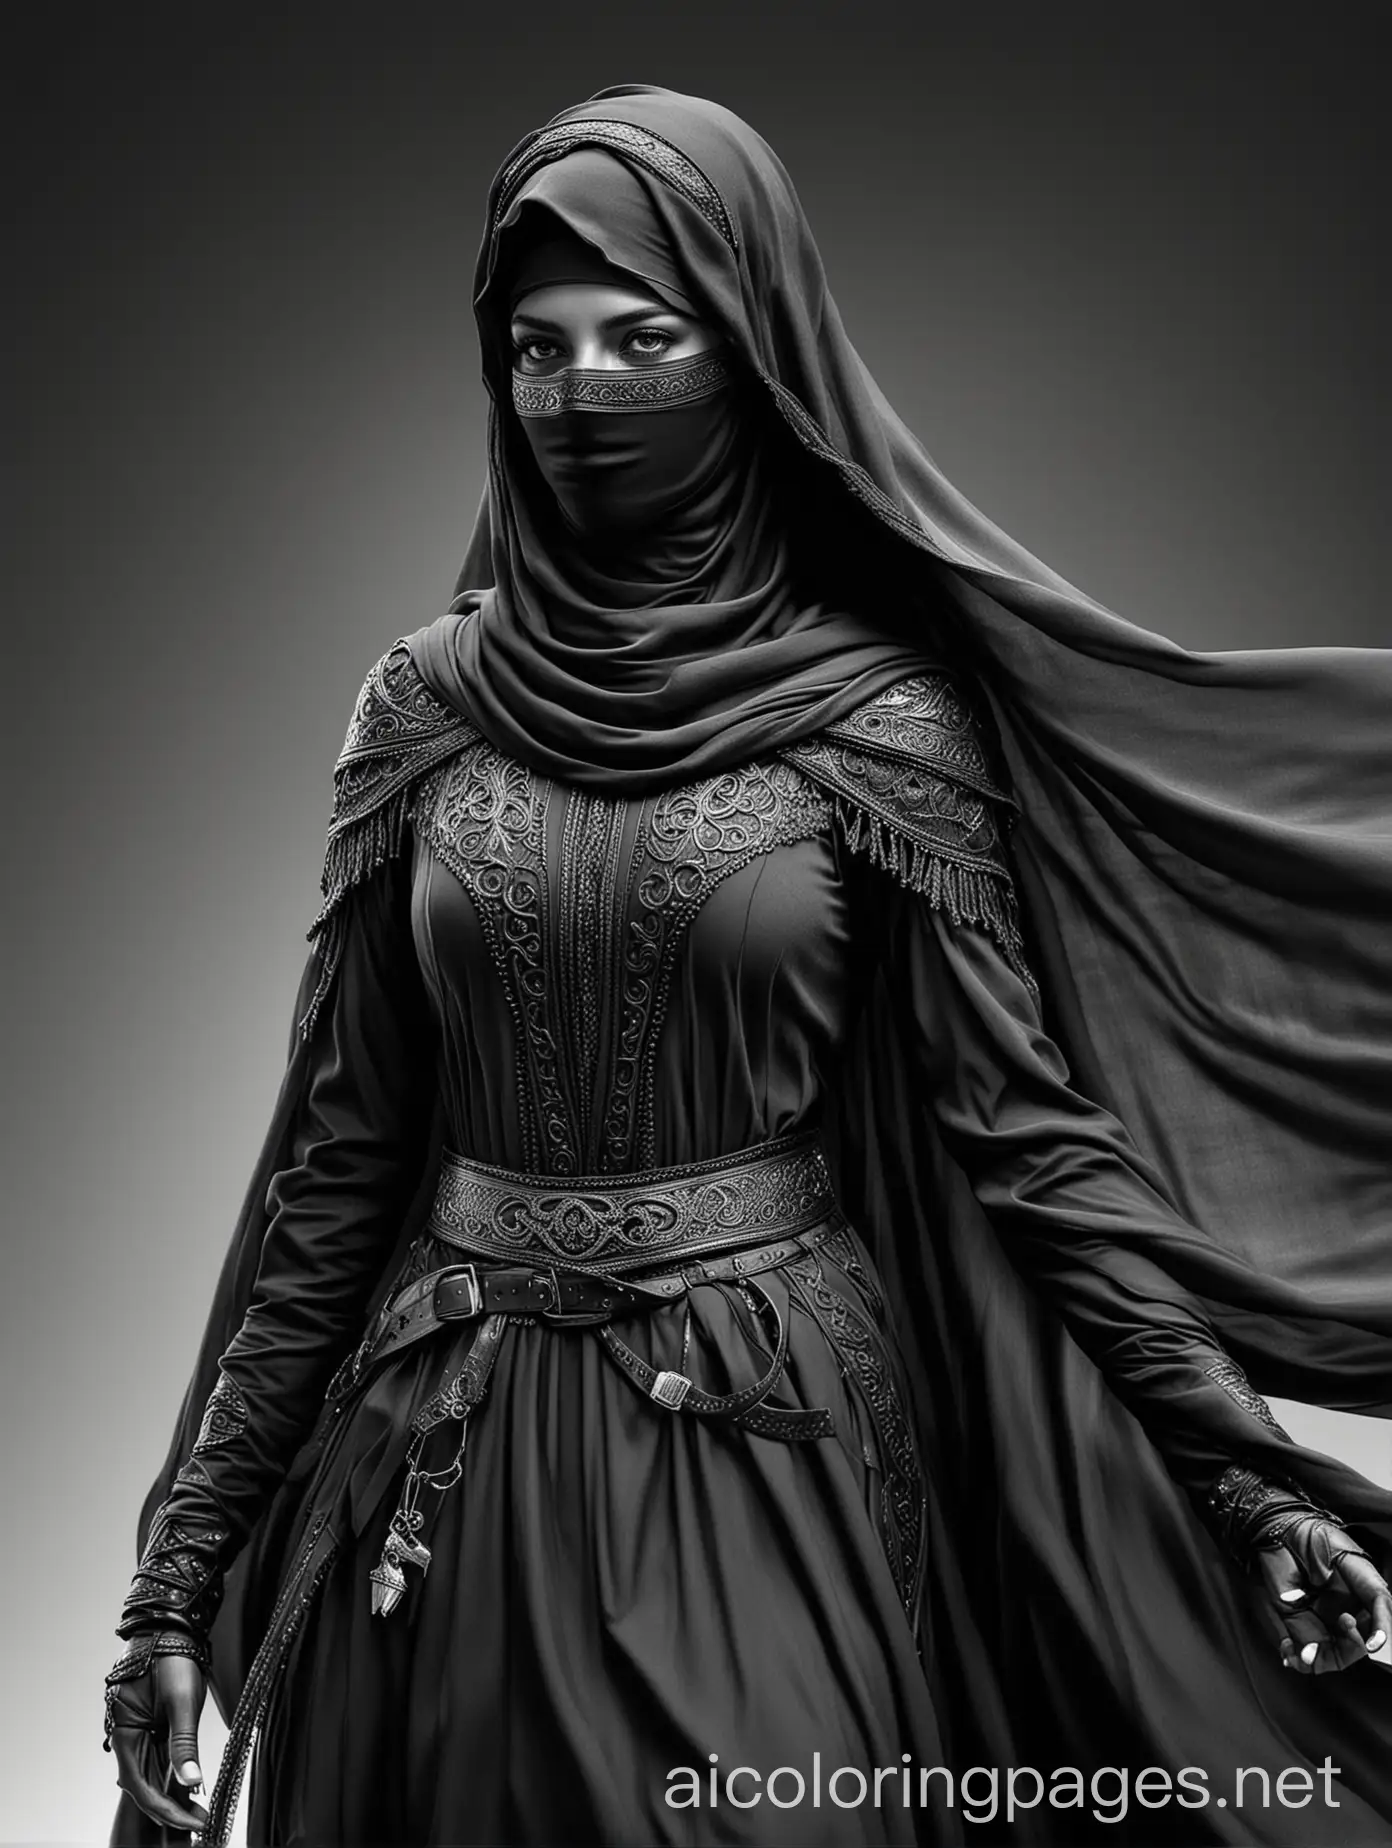 Arab-Horsewoman-in-Burqa-Riding-Majestic-Black-Horse-on-Battlefield